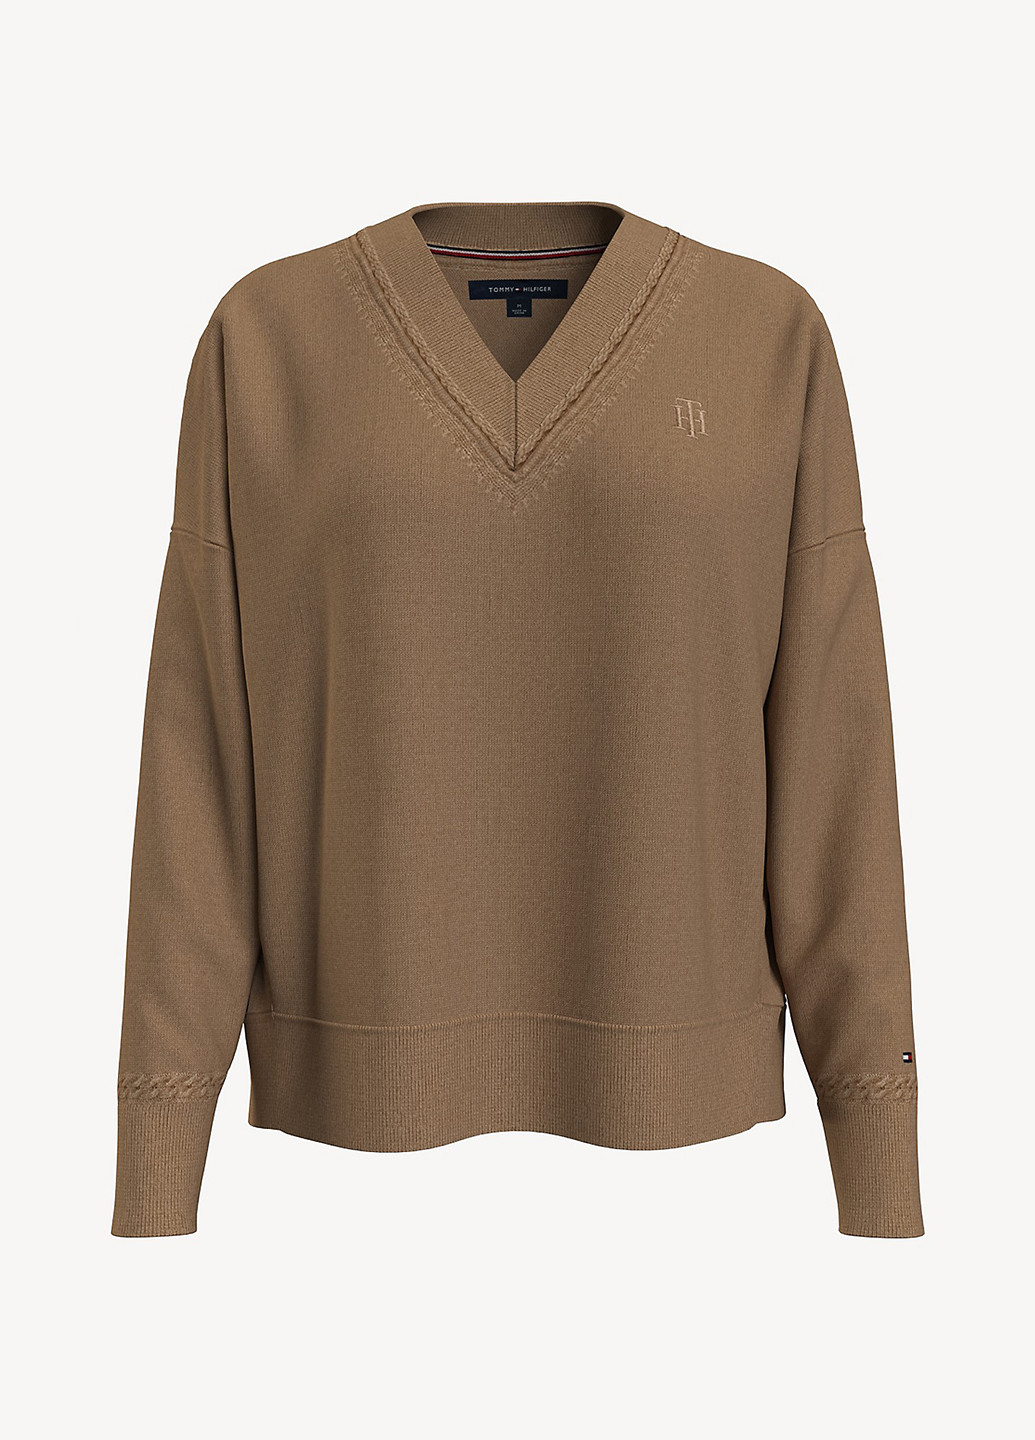 Коричневый демисезонный пуловер пуловер Tommy Hilfiger